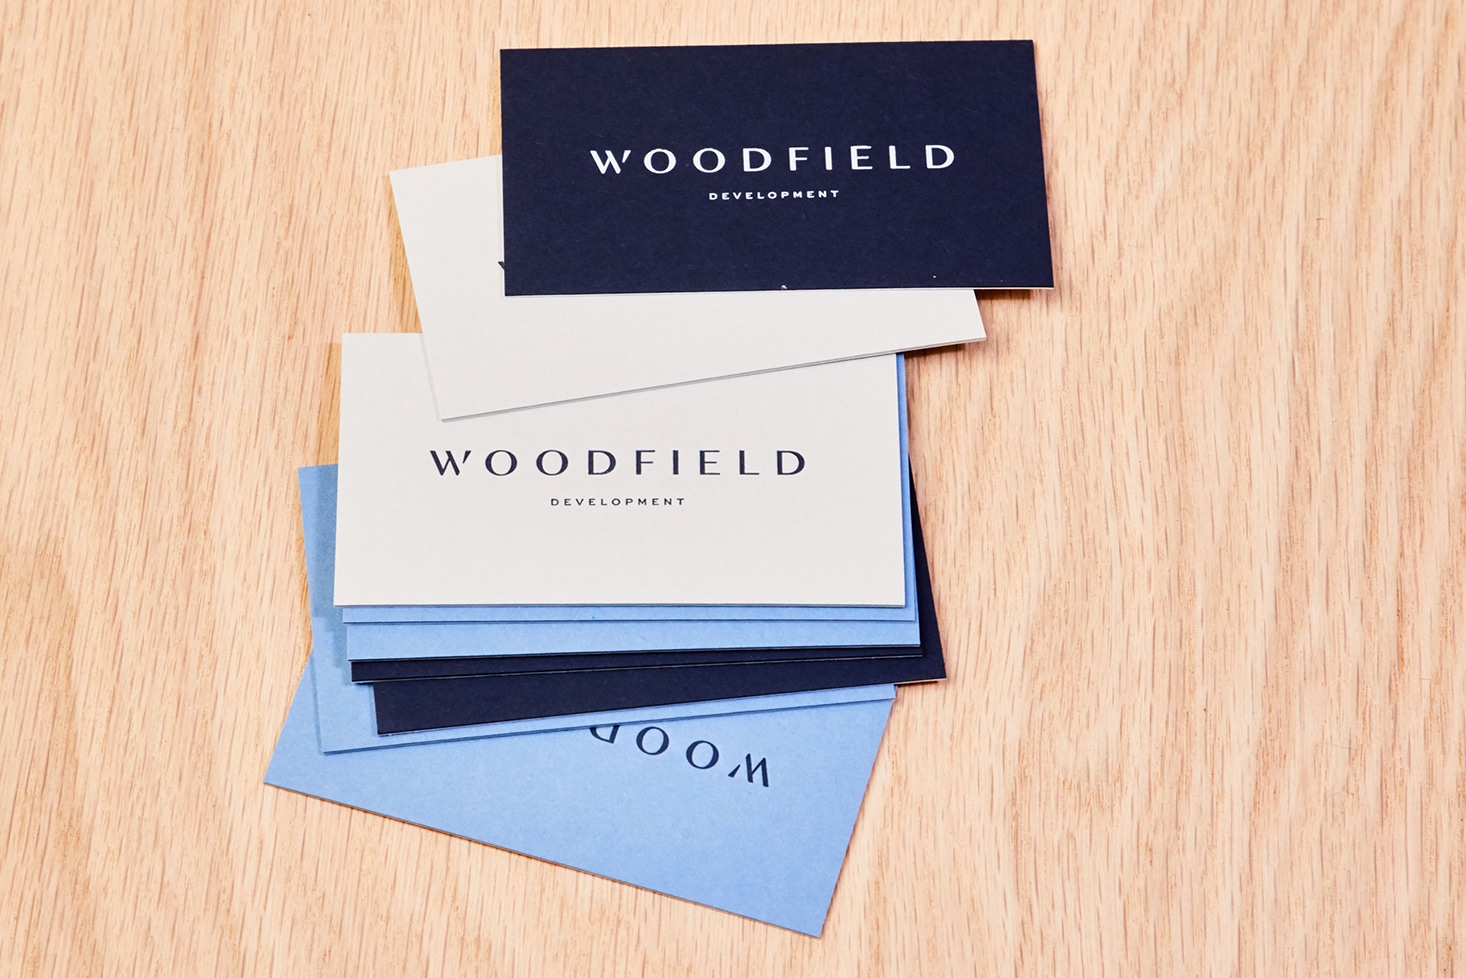 Woodfield Development | SDCO Partners